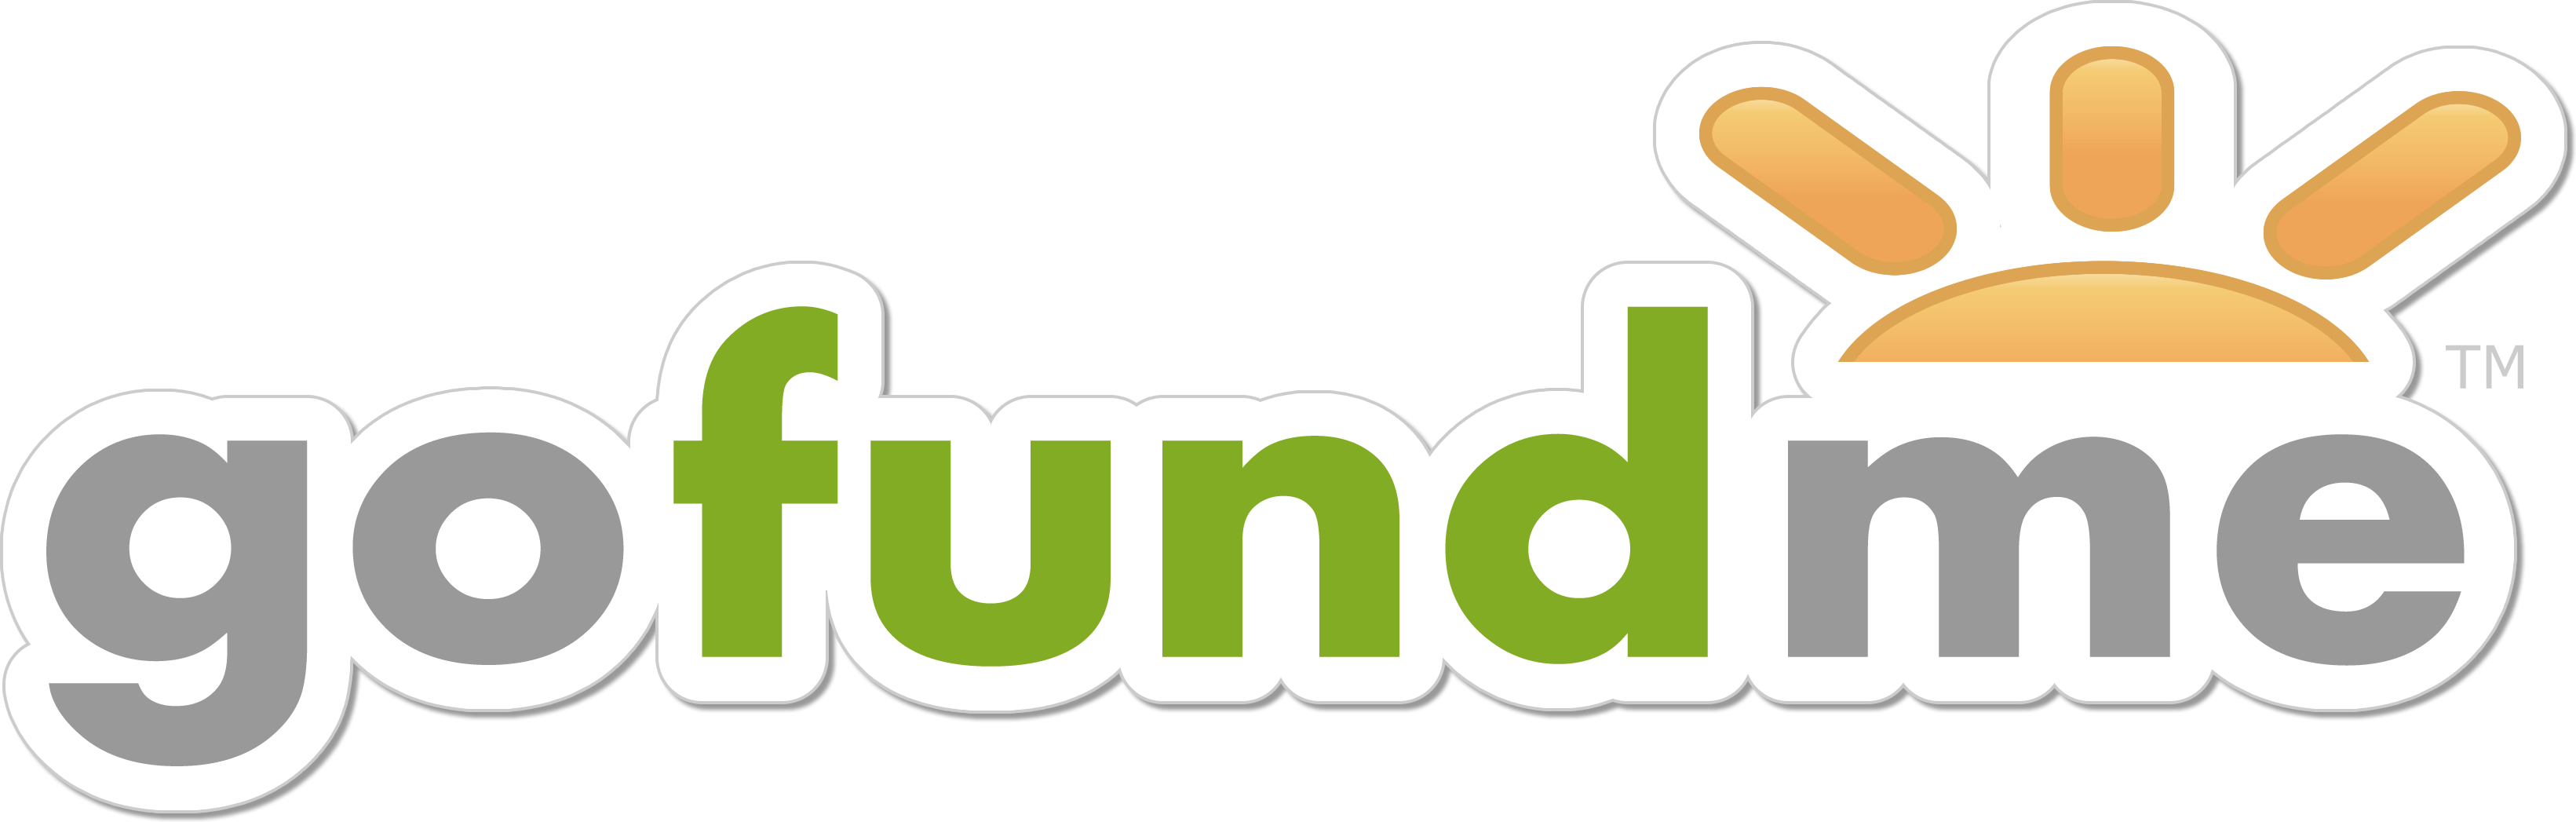 Go Fund Me Logo Wallpaper